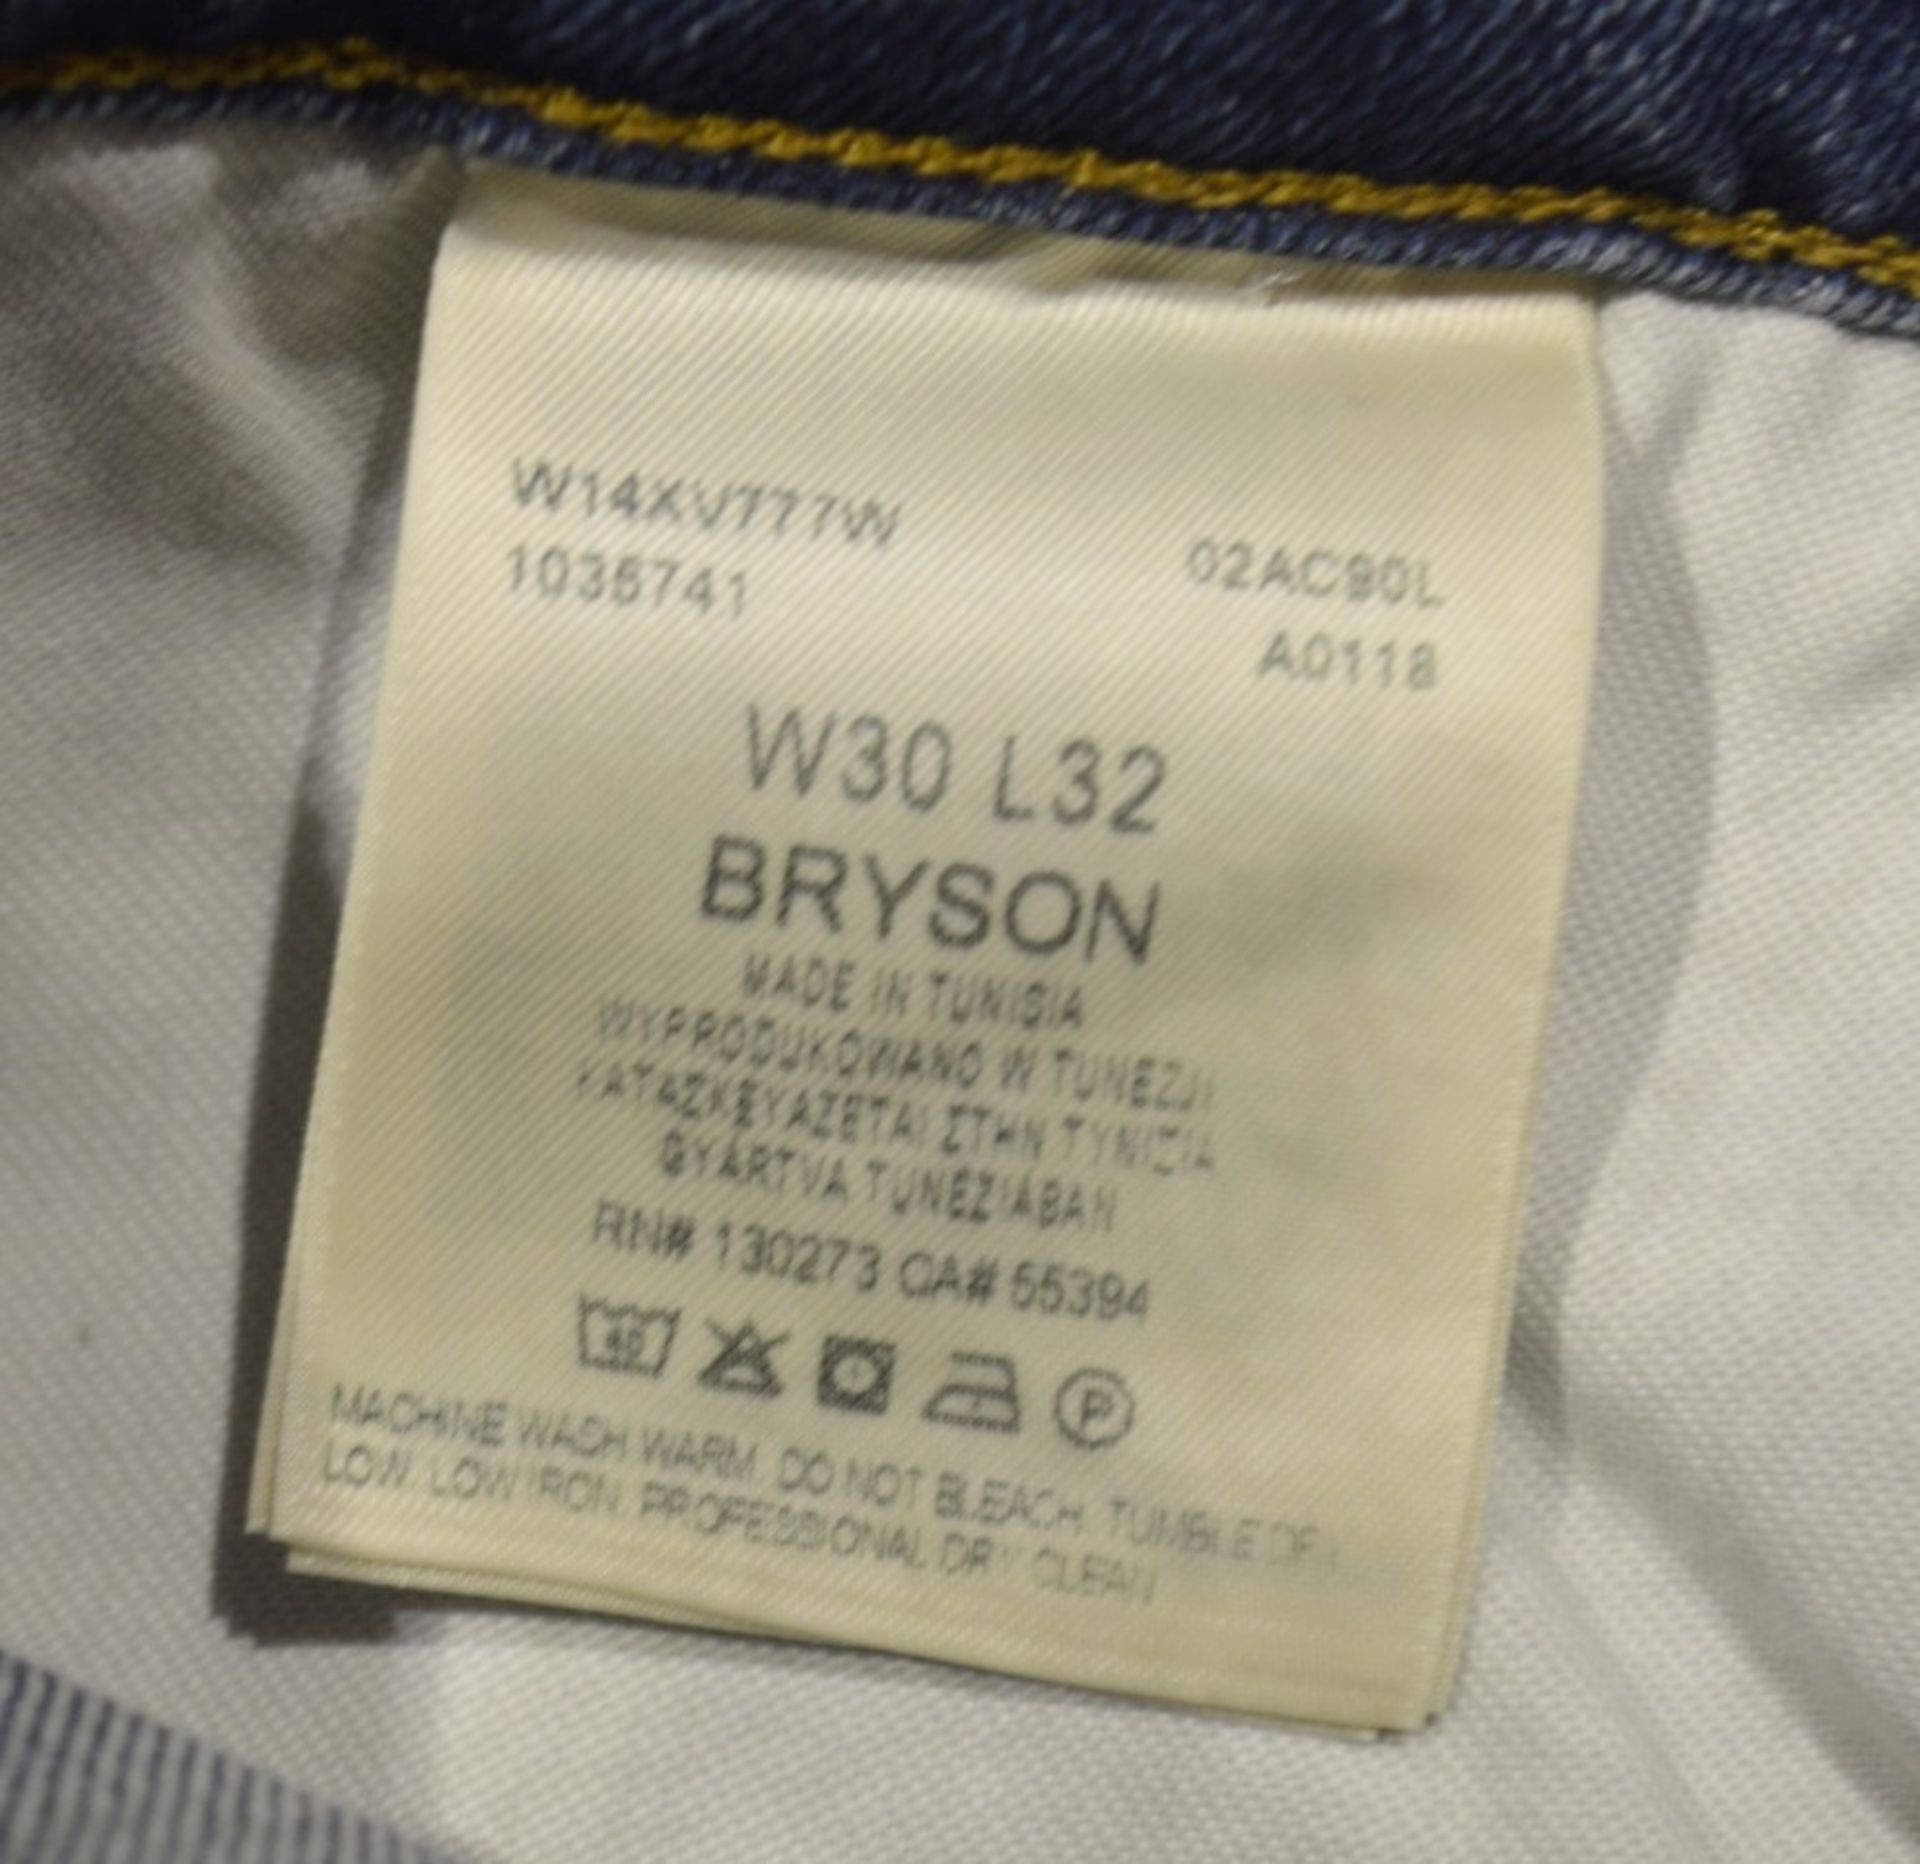 1 x Pair Of Men's Genuine Wrangler BRYSON Skinny Jeans In Blue - Size: UK 30/32 - Preowned, Like - Image 2 of 10